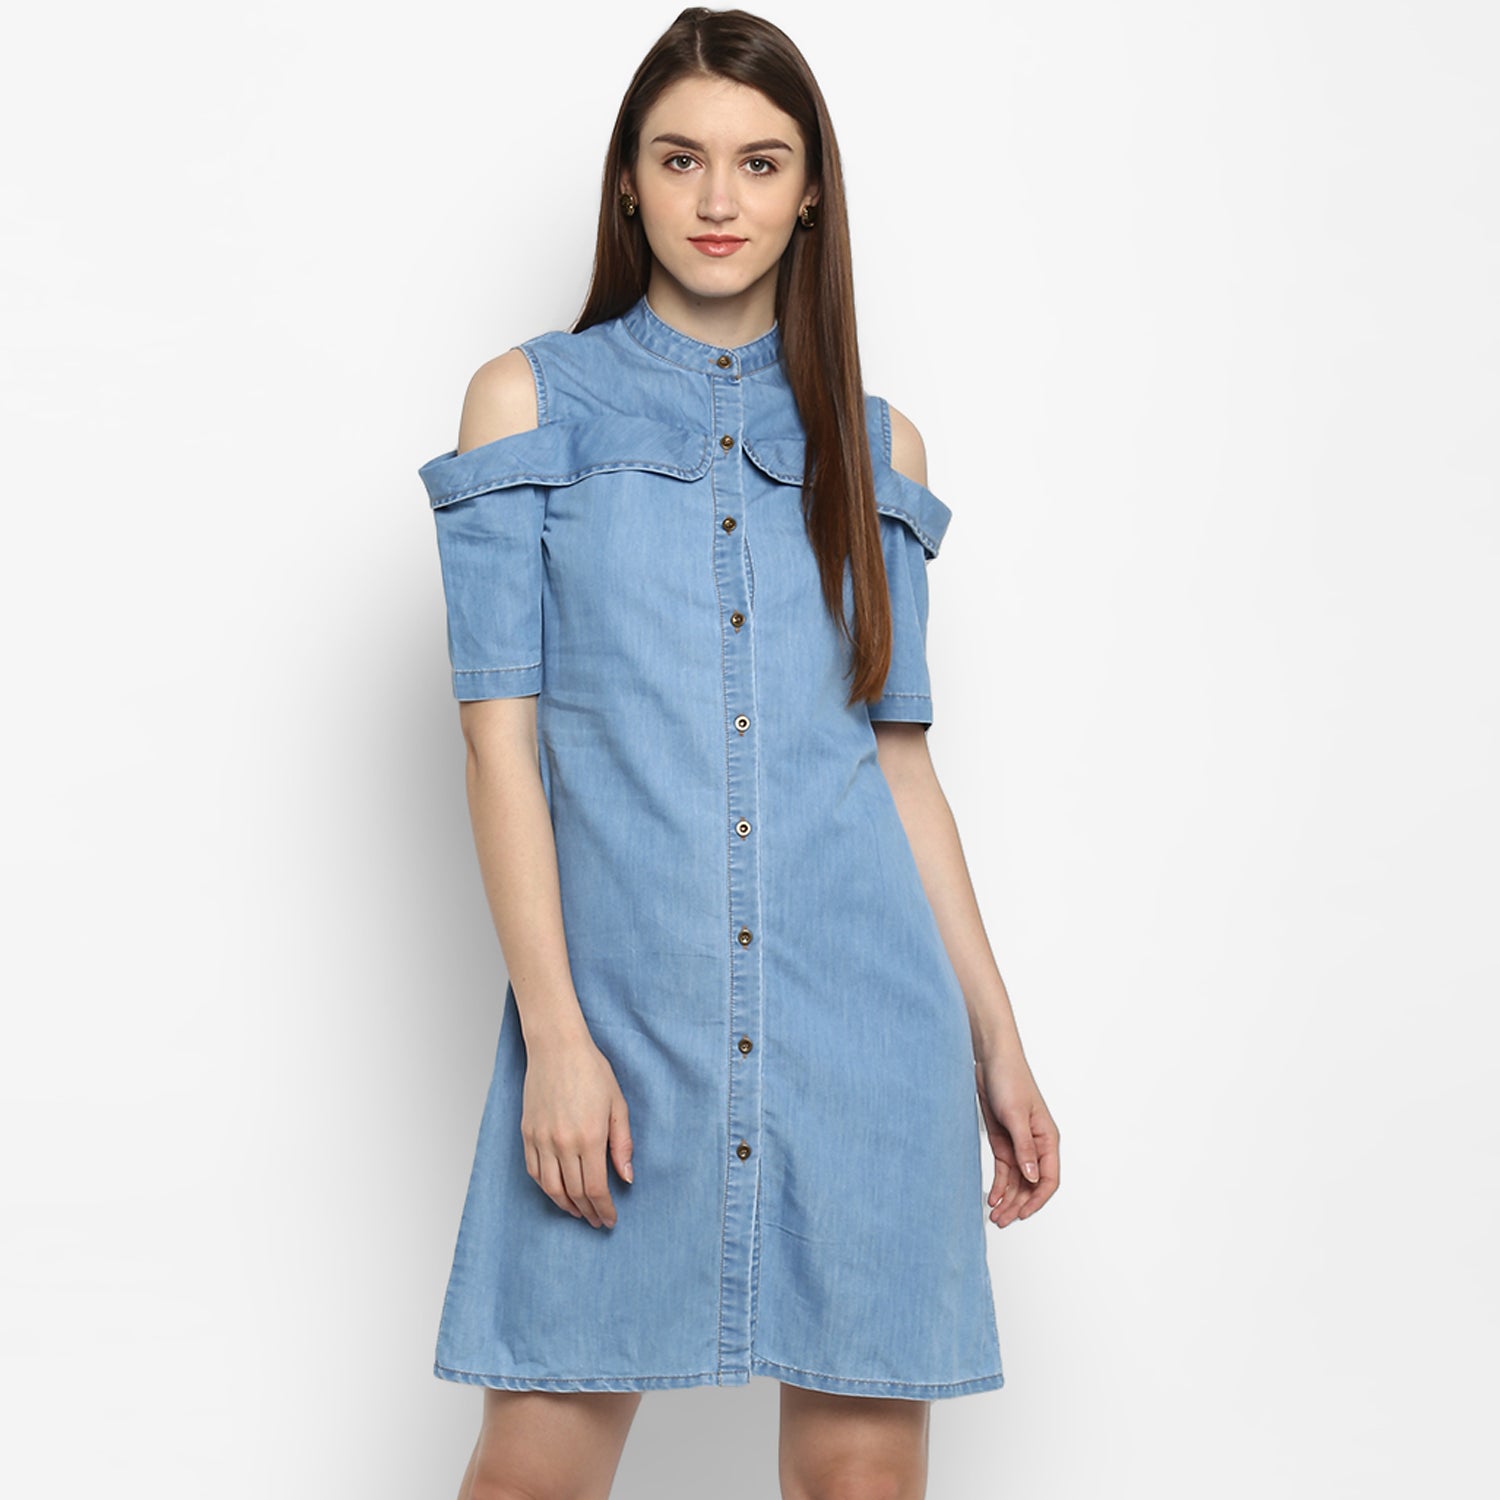 BlankNYC Women's Cold Shoulder Denim Dress Pockets size Medium | eBay